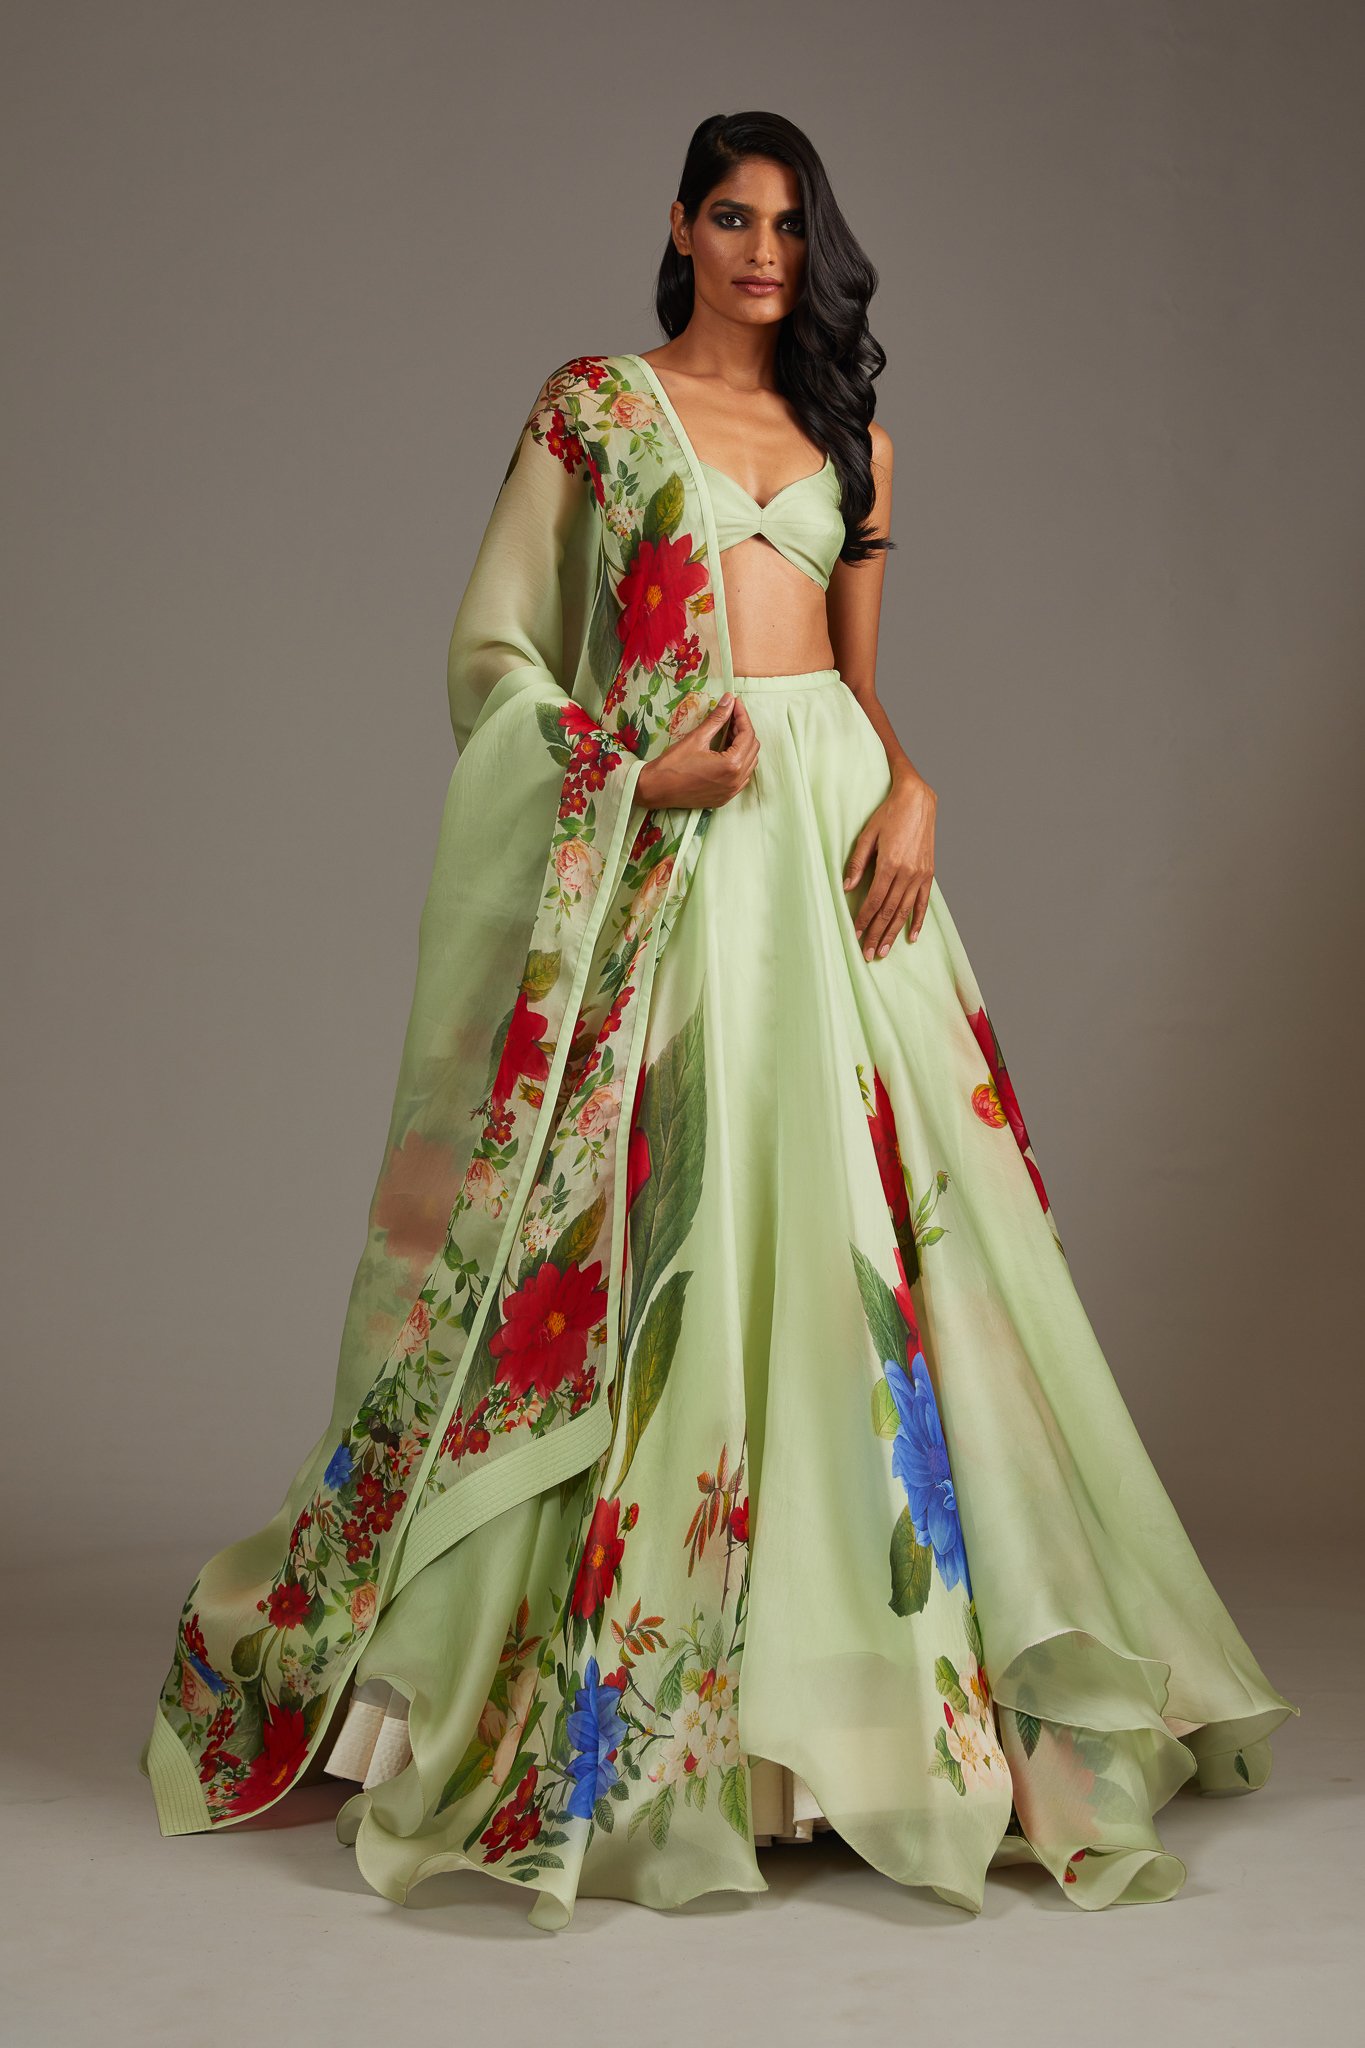 Lehenga Designs 2020: Latest Lehenga Styles And Wedding Fashion Trends For  Brides-To-Be